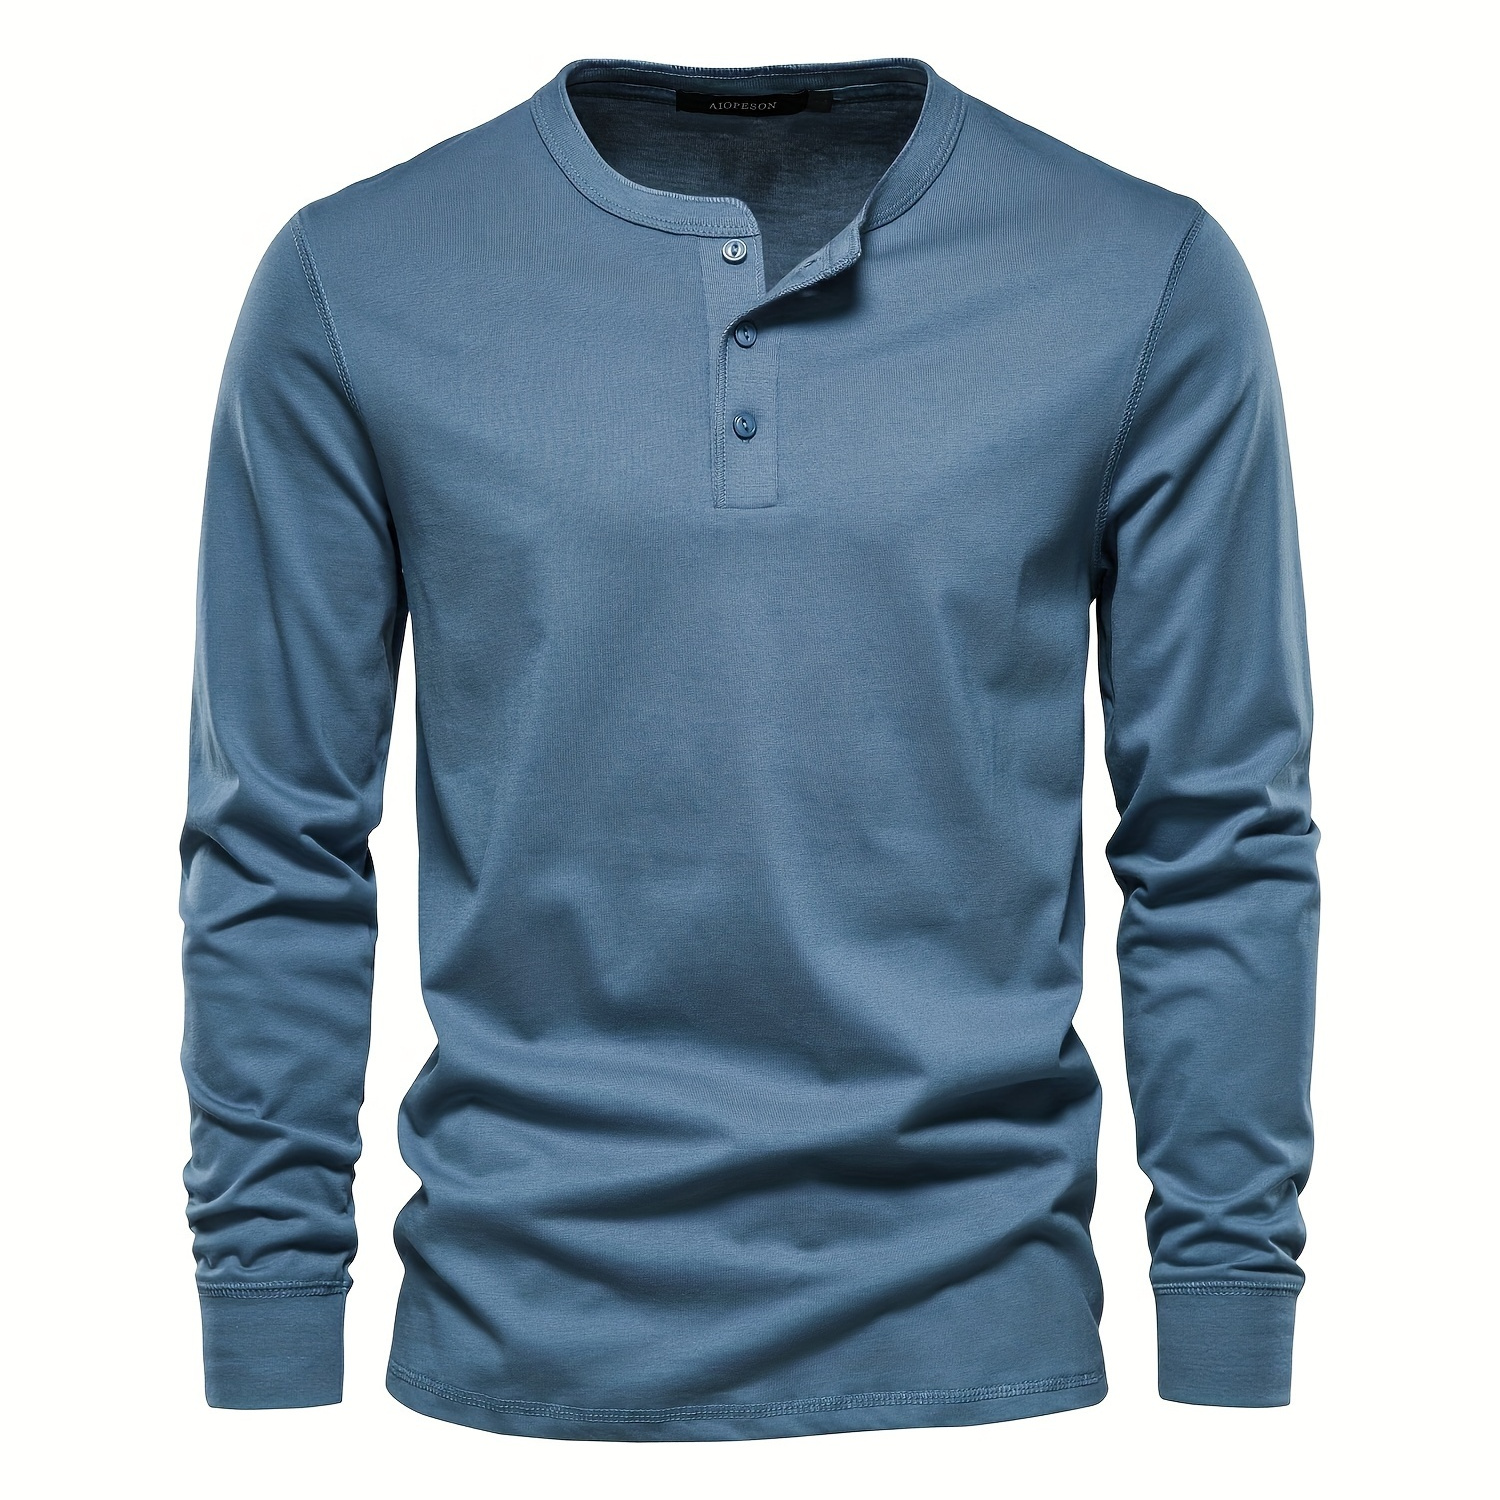 RYRJJ Mens Henley Shirts Long Sleeve T Shirt Fashion Casual Slim Fit  Lightweight Basic Plain Pullover Tee Shirts(Dark Gray,3XL) 